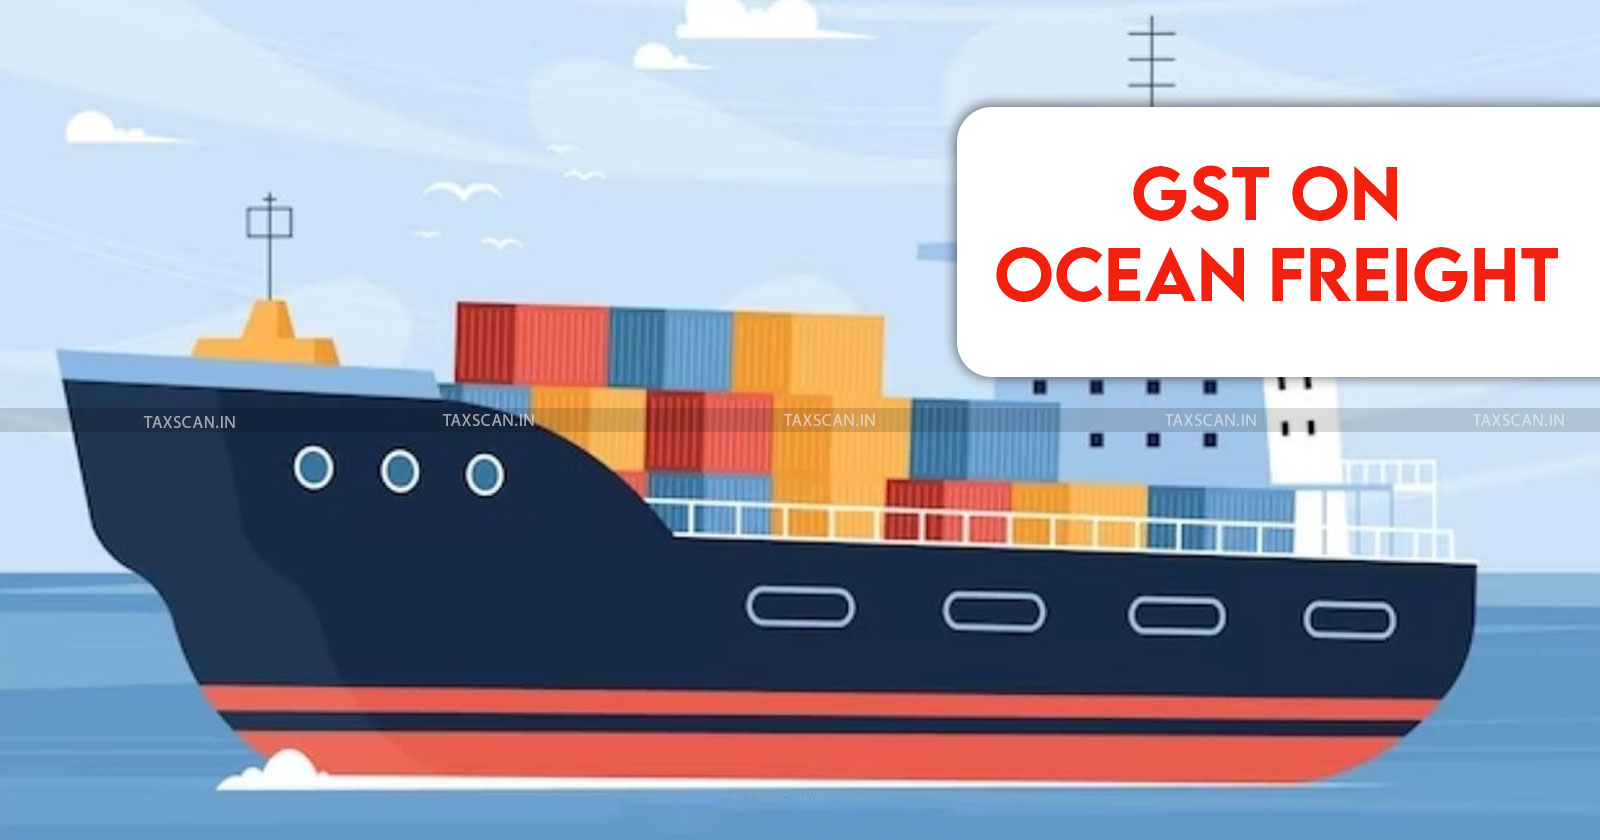 GST on Ocean Freight